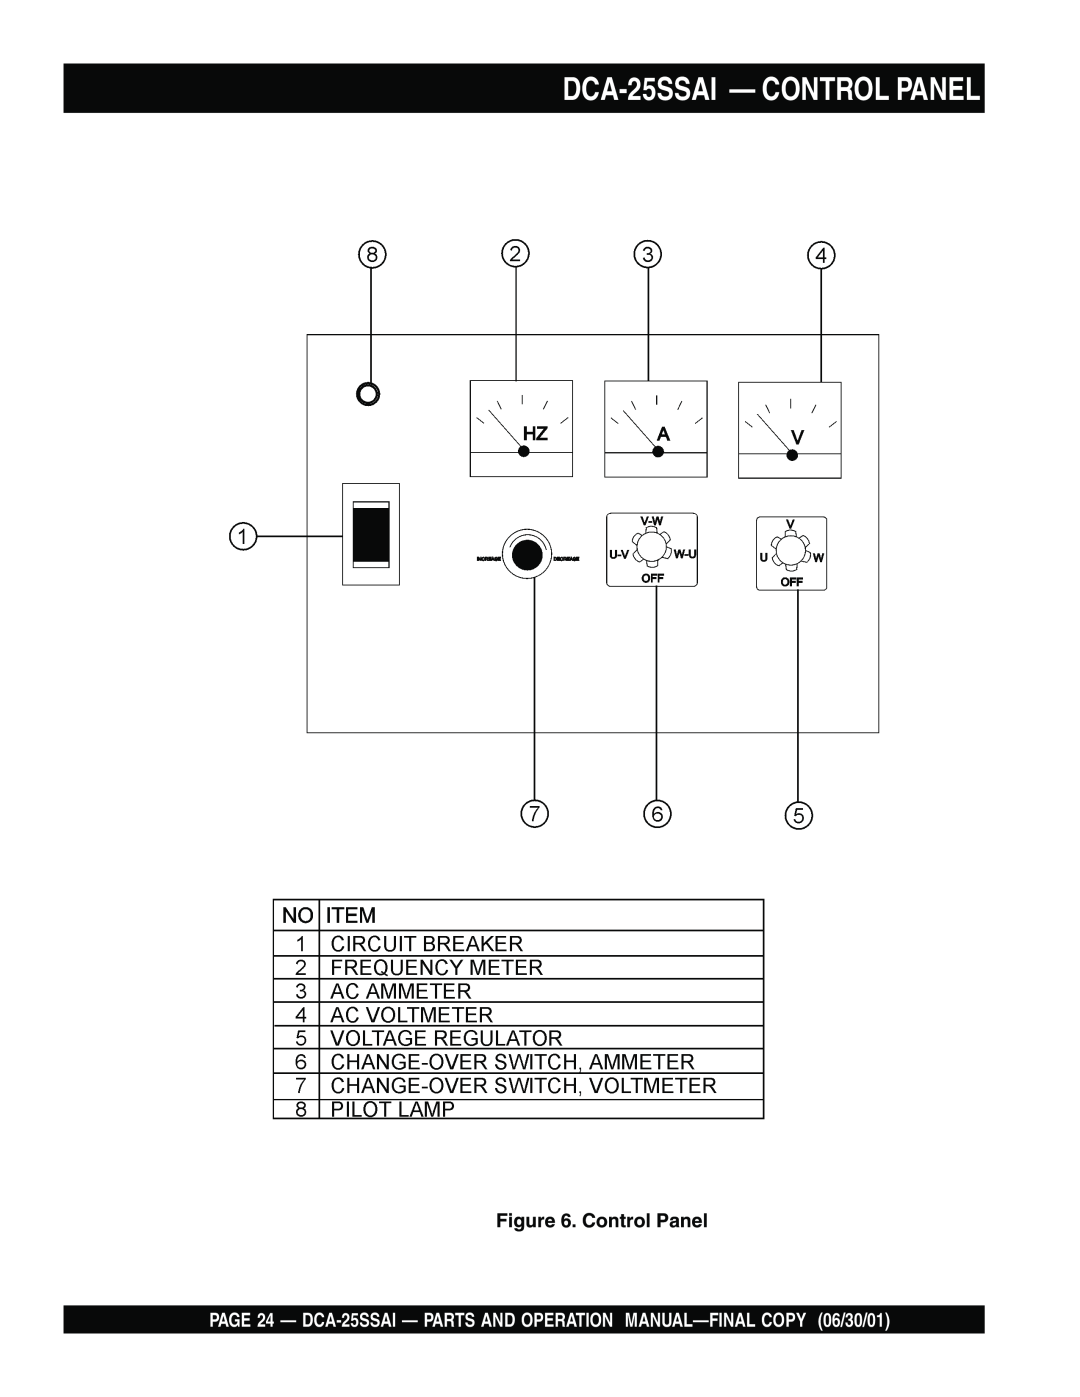 Multiquip operation manual DCA-25SSAI - CONTROL PANEL, Control Panel 